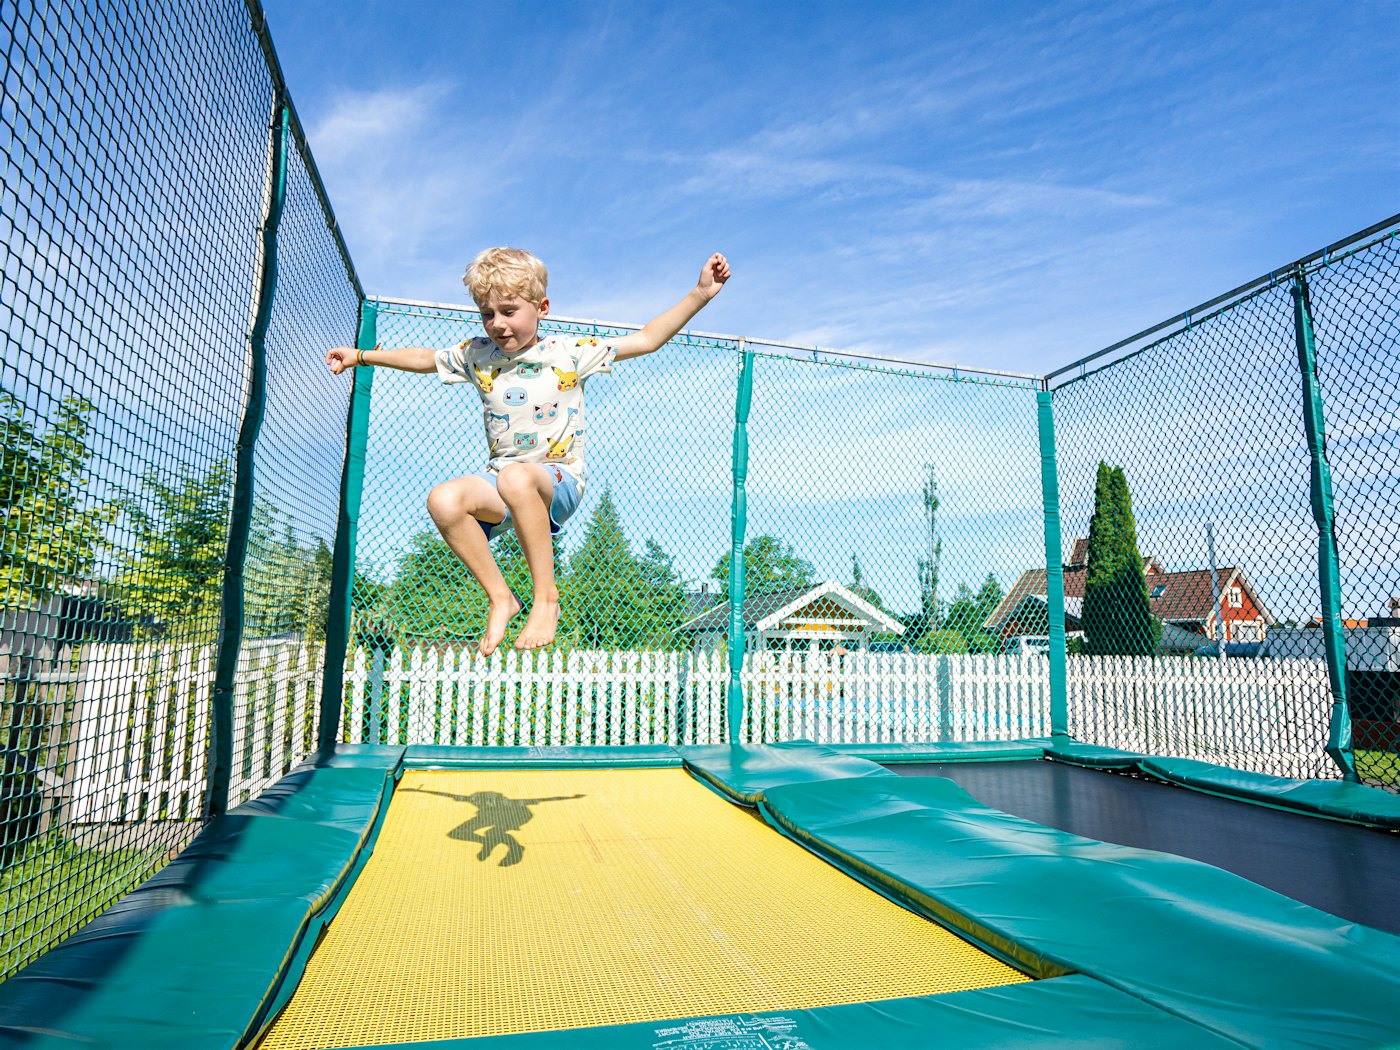 A boy jumps on a trampoline. Photo